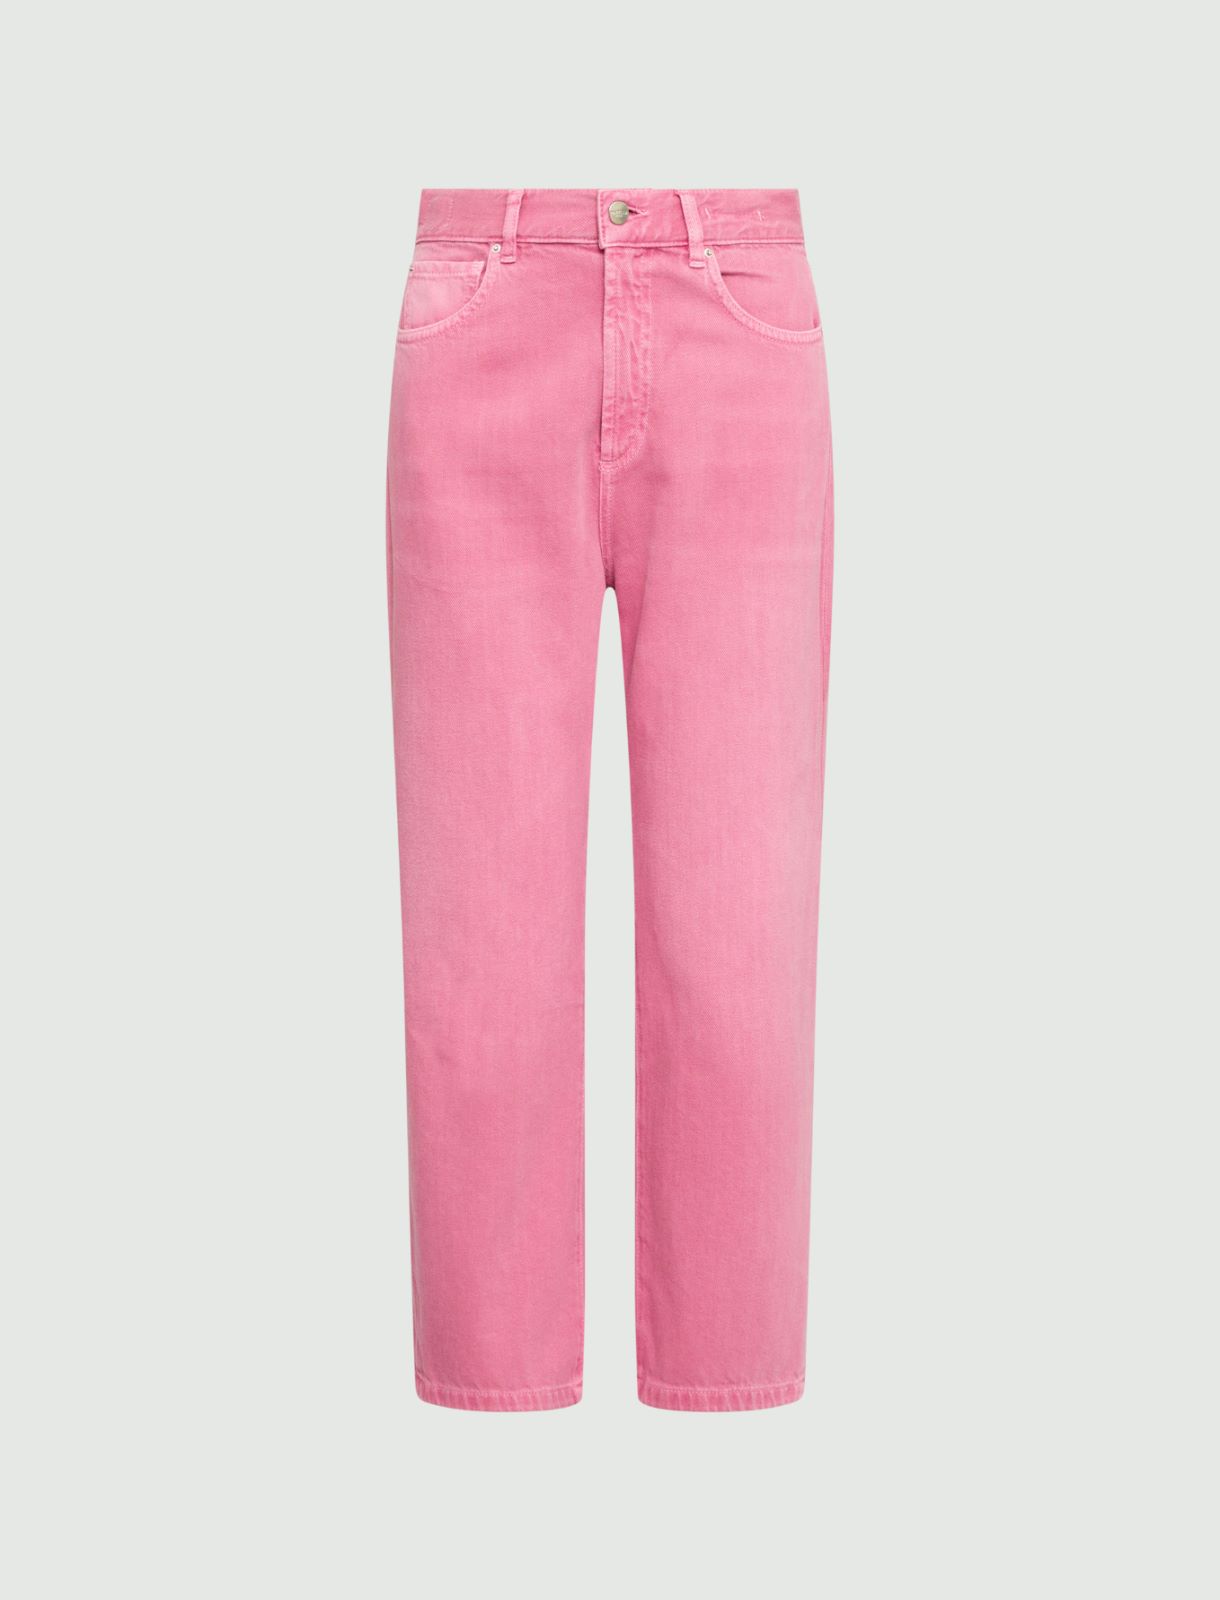 Mom Fit Jeans - Shocking pink - Marella